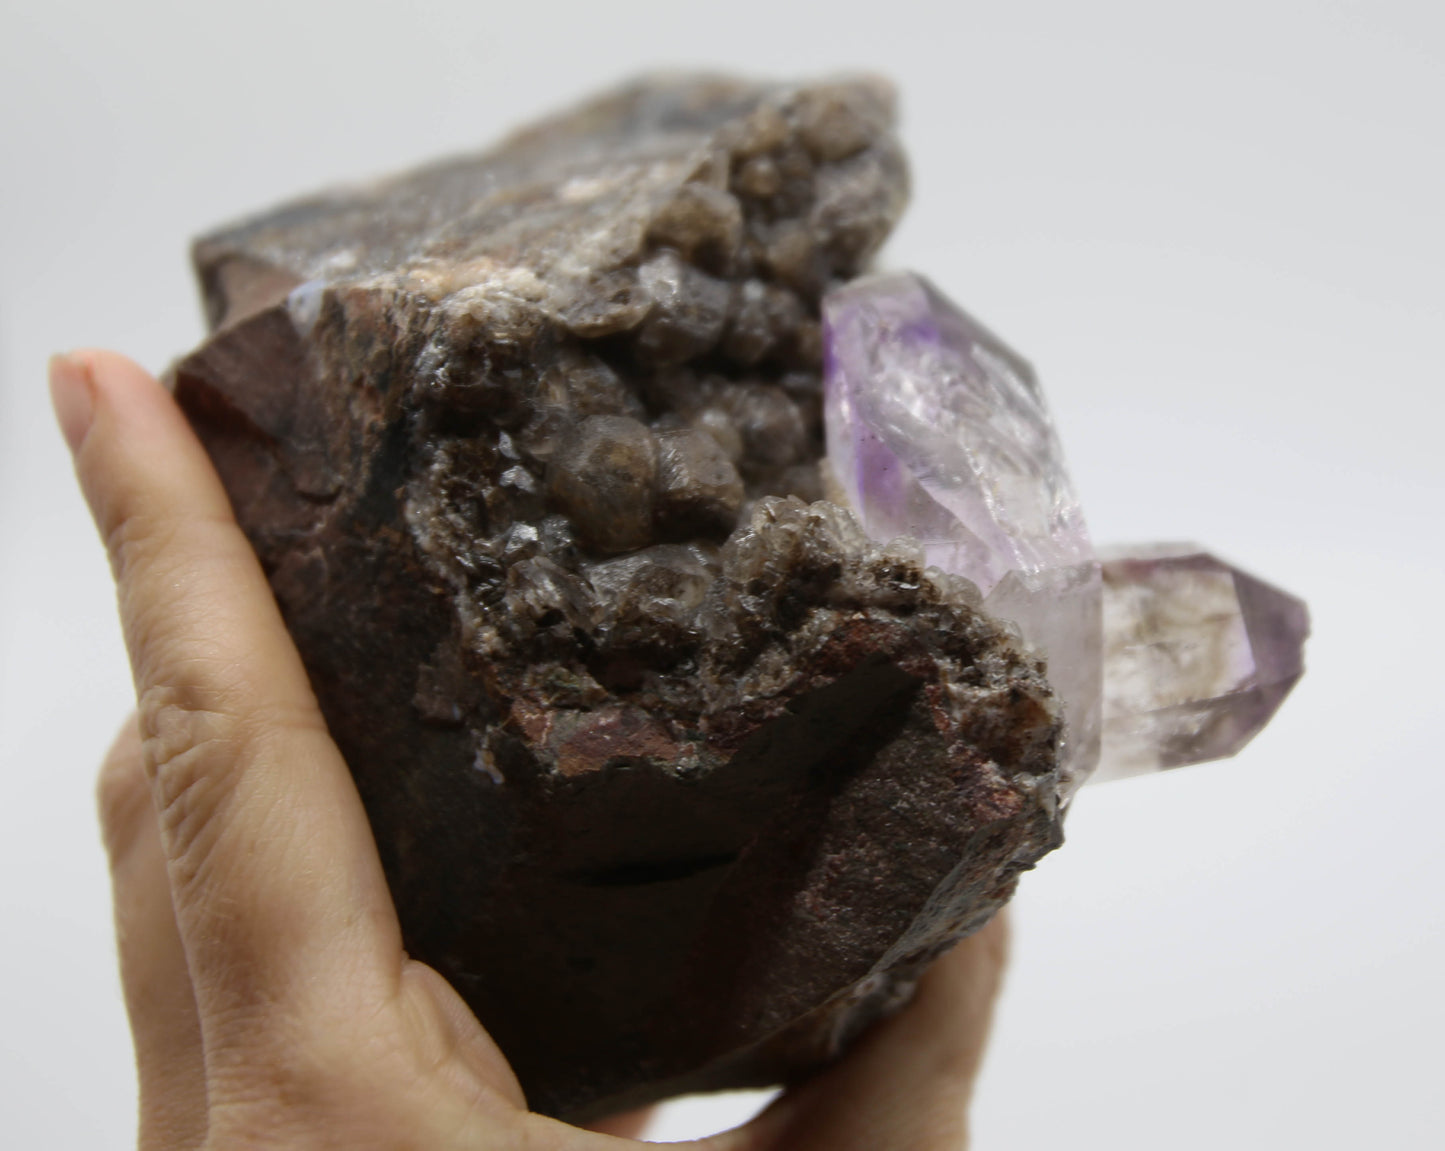 Brandberg Amethyst, Self-Healed, on Calcite and Basalt